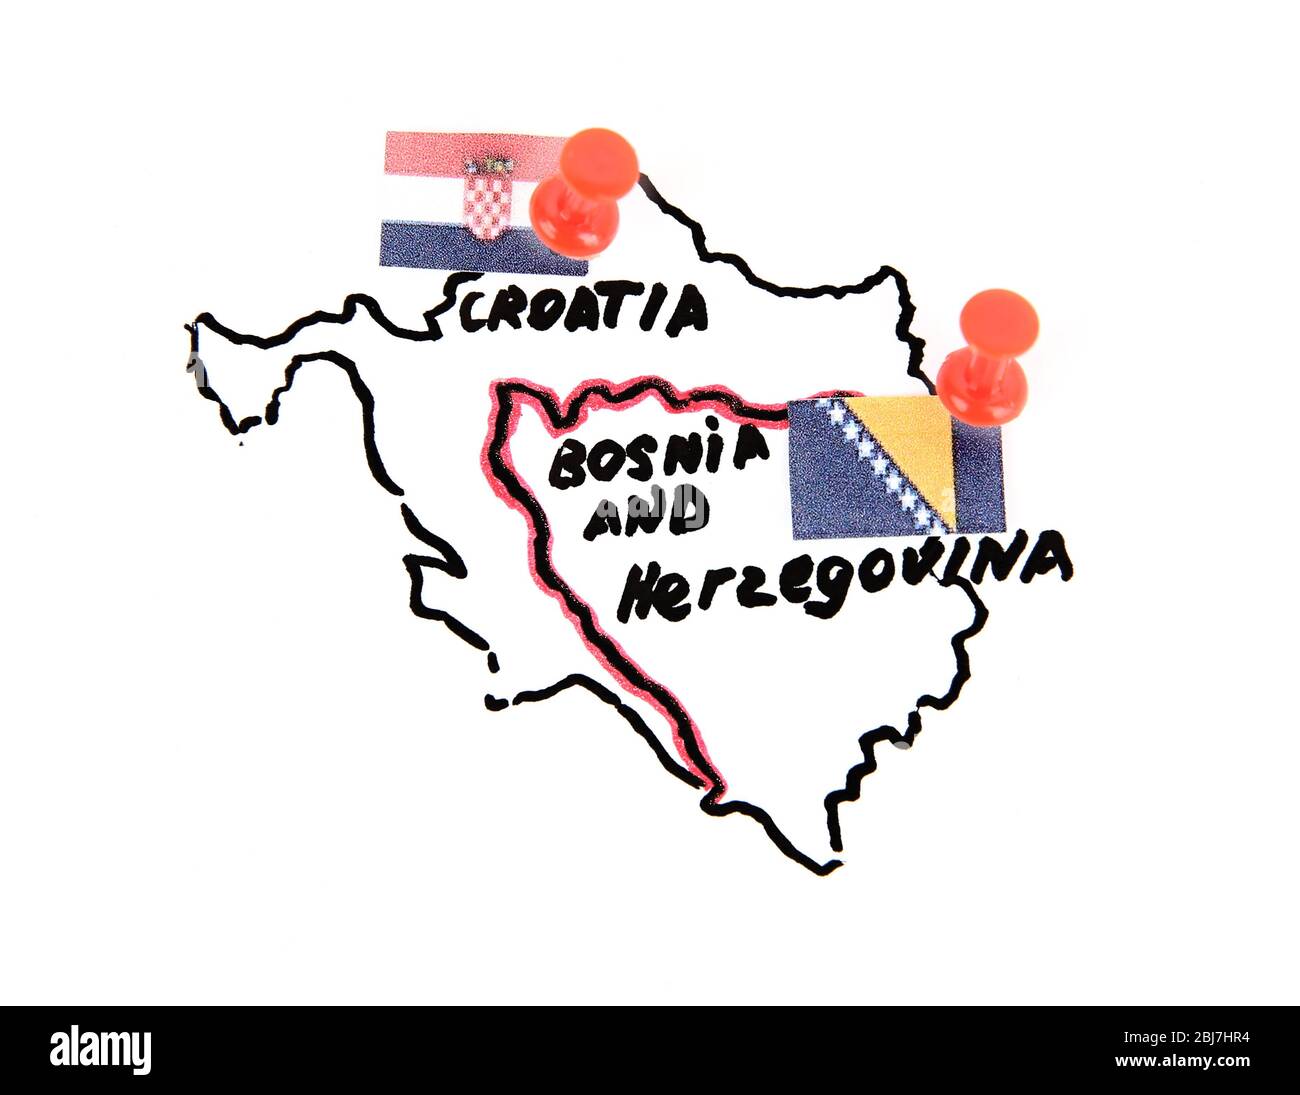 Map of Croatia and Bosnia and Herzegovina - territorial dispute concept Stock Photo